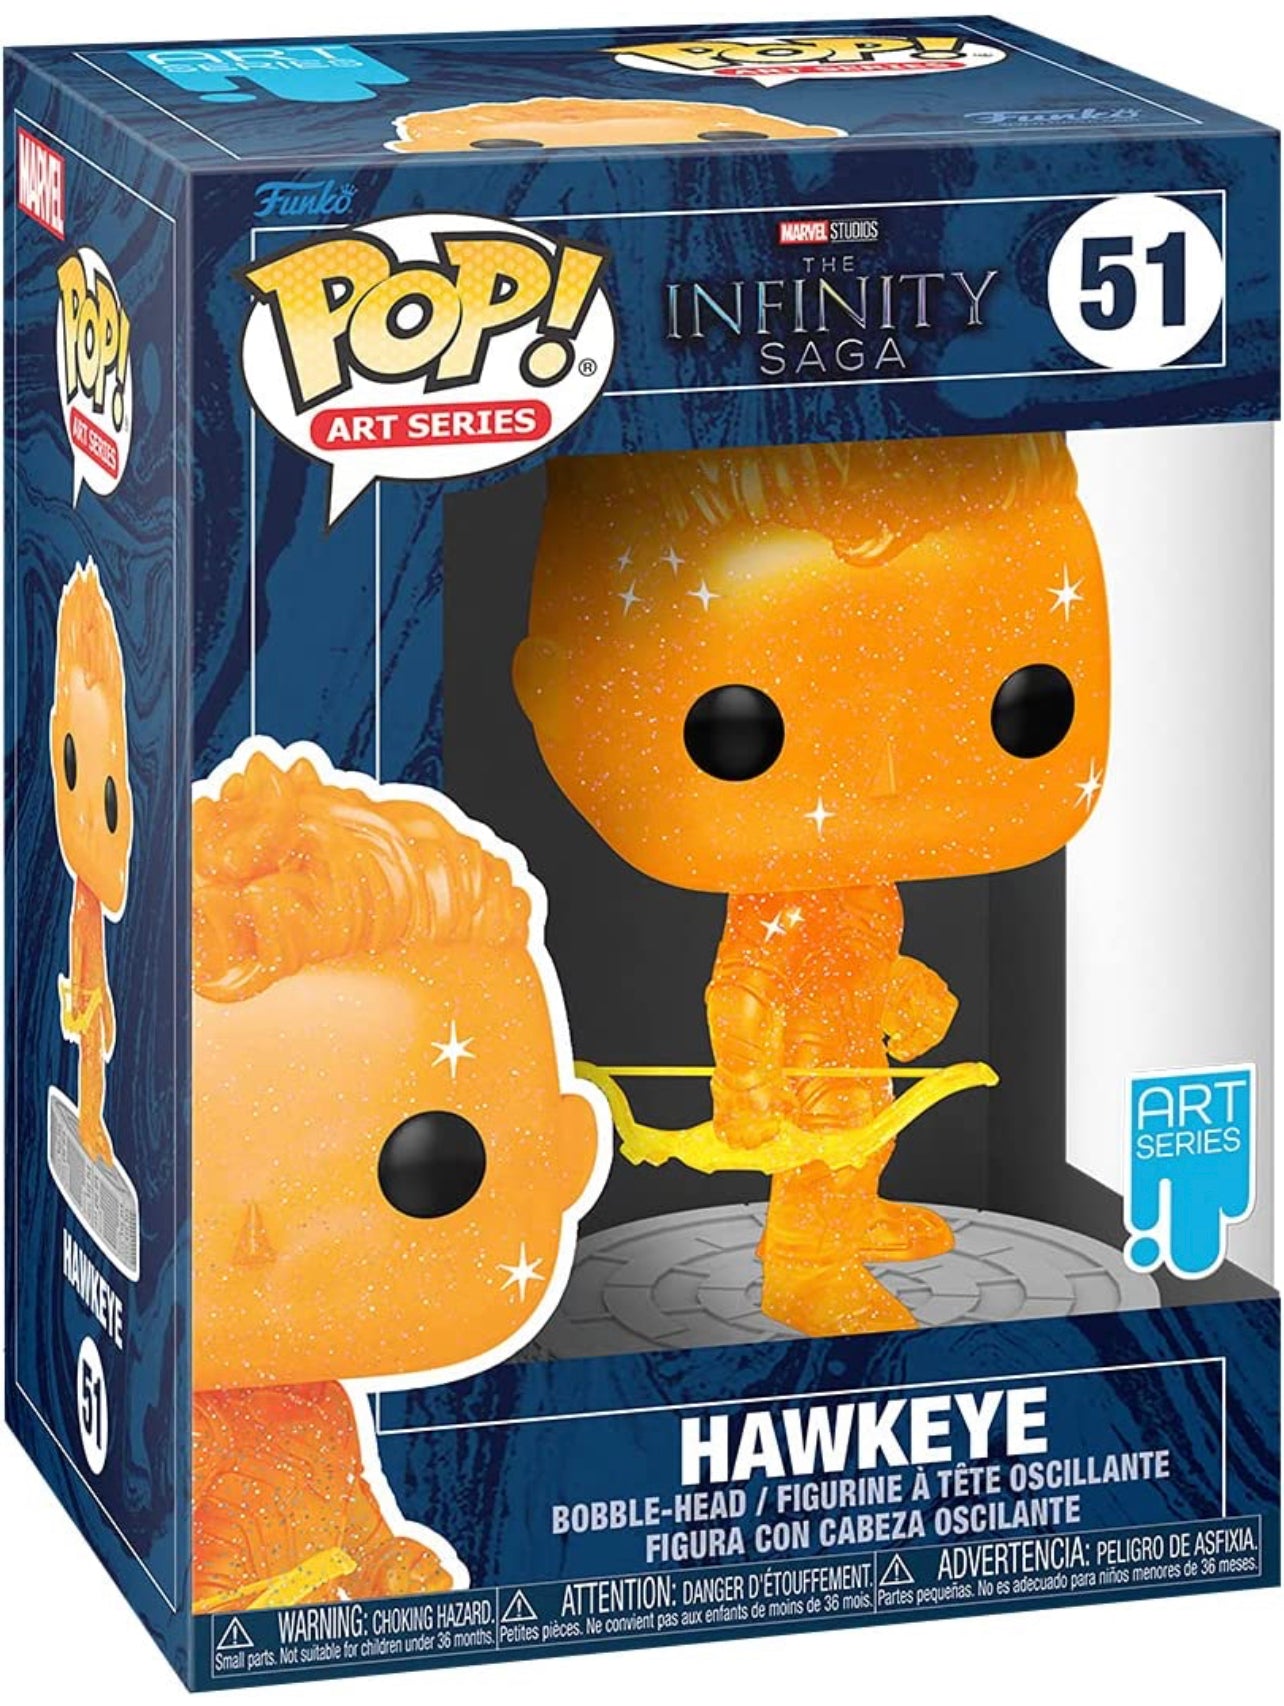 Funko Pop! Art Series: Marvel Infinity Saga - Hawkeye #51 Exclusive - 57615 Comes sealed in a Hard Case display box protector 💯✅ - DaFunkoShop - Funko Pop! Art Series